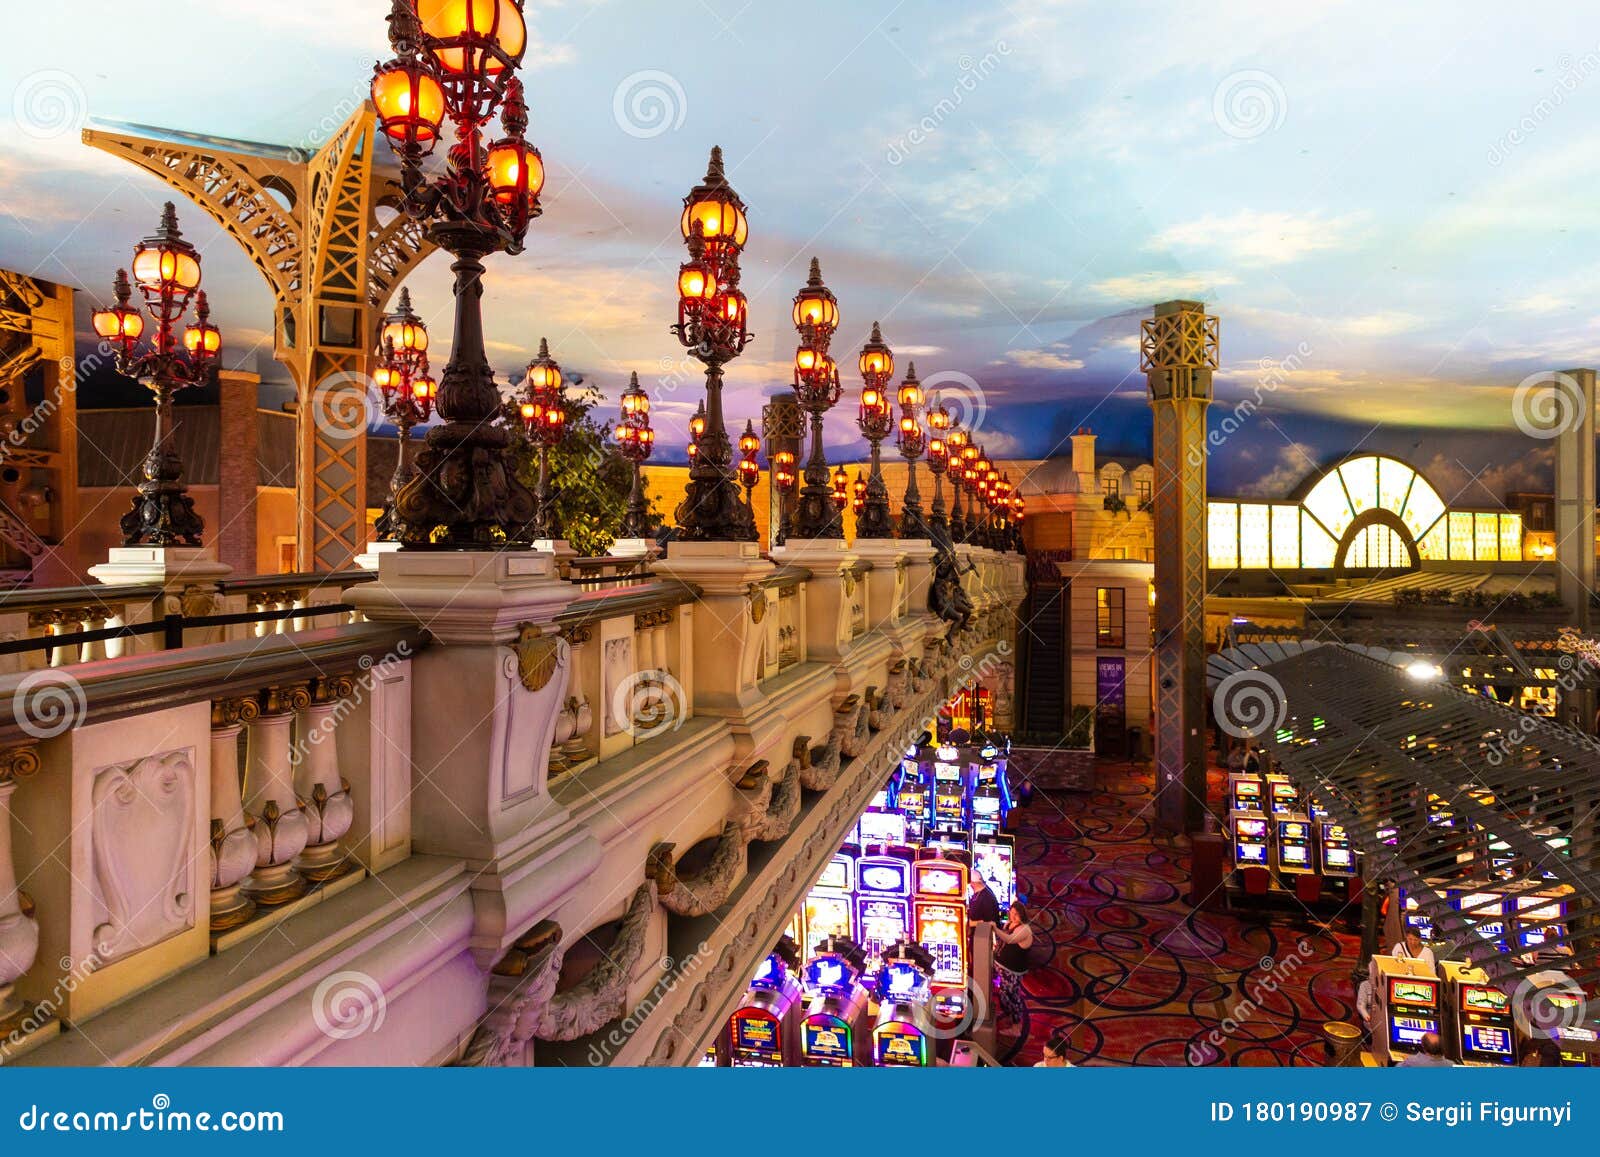 Paris Las Vegas Hotel and Casino Editorial Photography - Image of